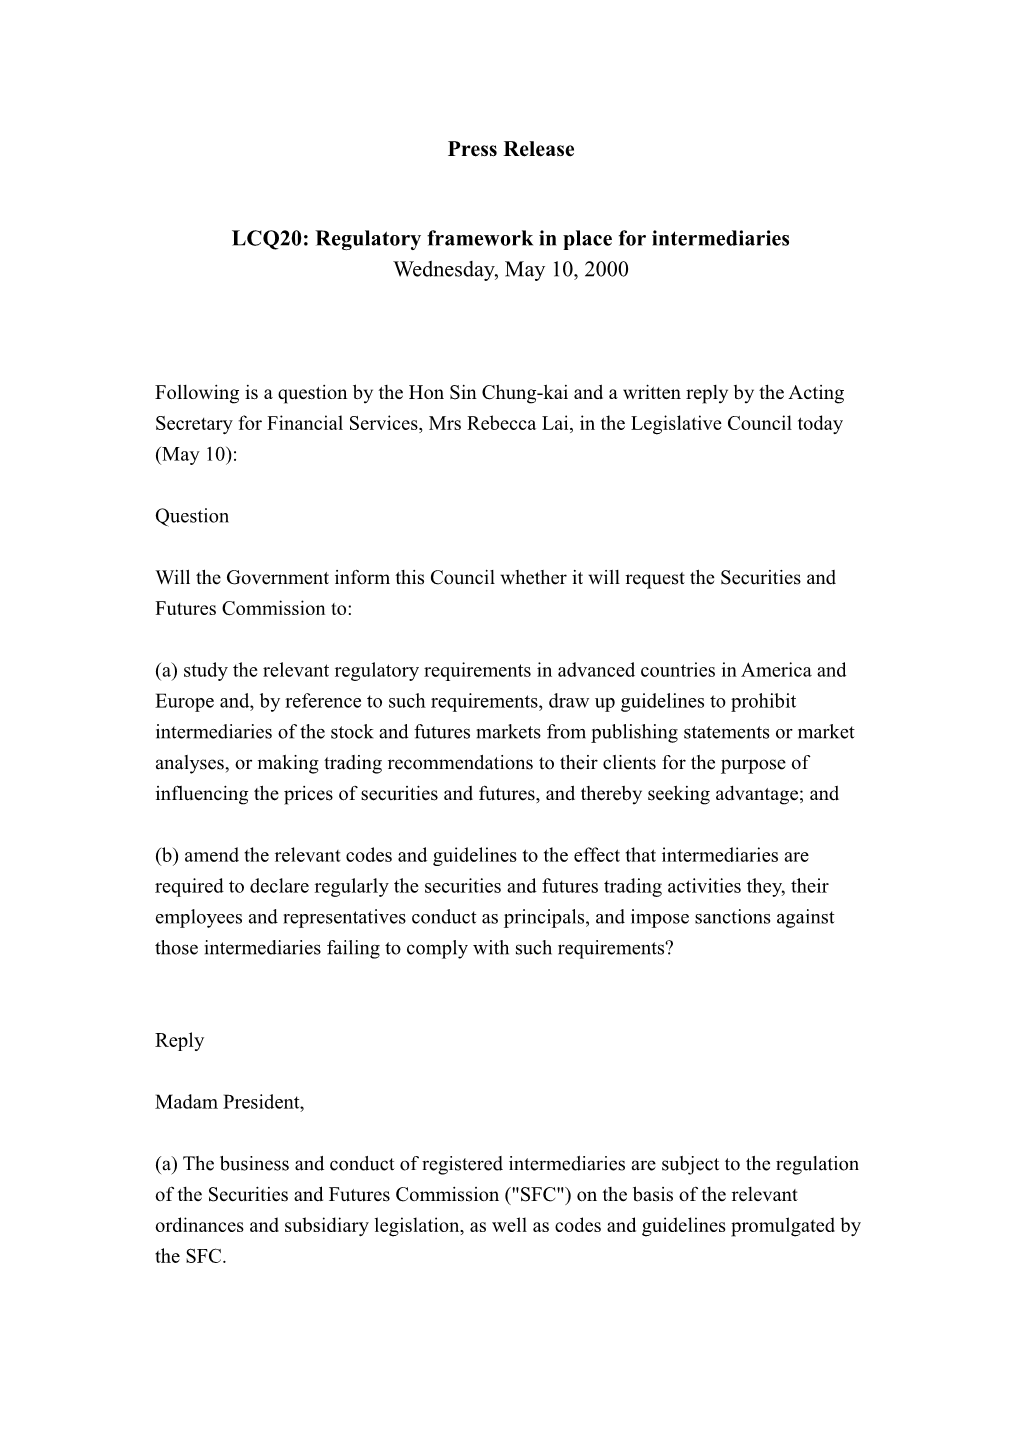 LCQ20: Regulatory Framework in Place for Intermediaries